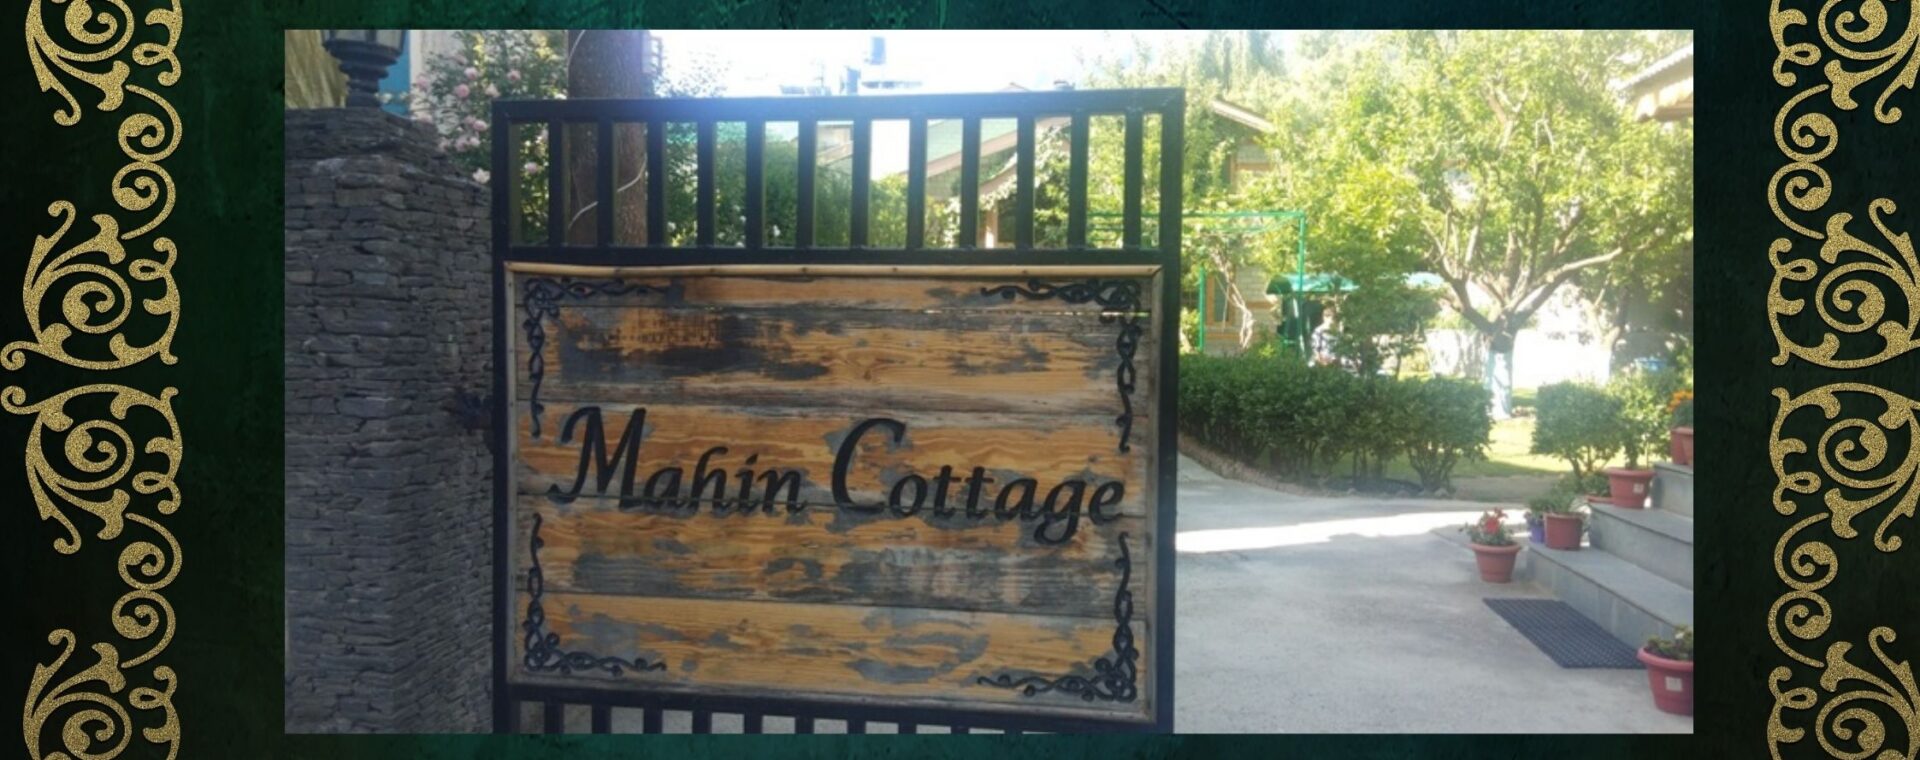 Mahin Cottage